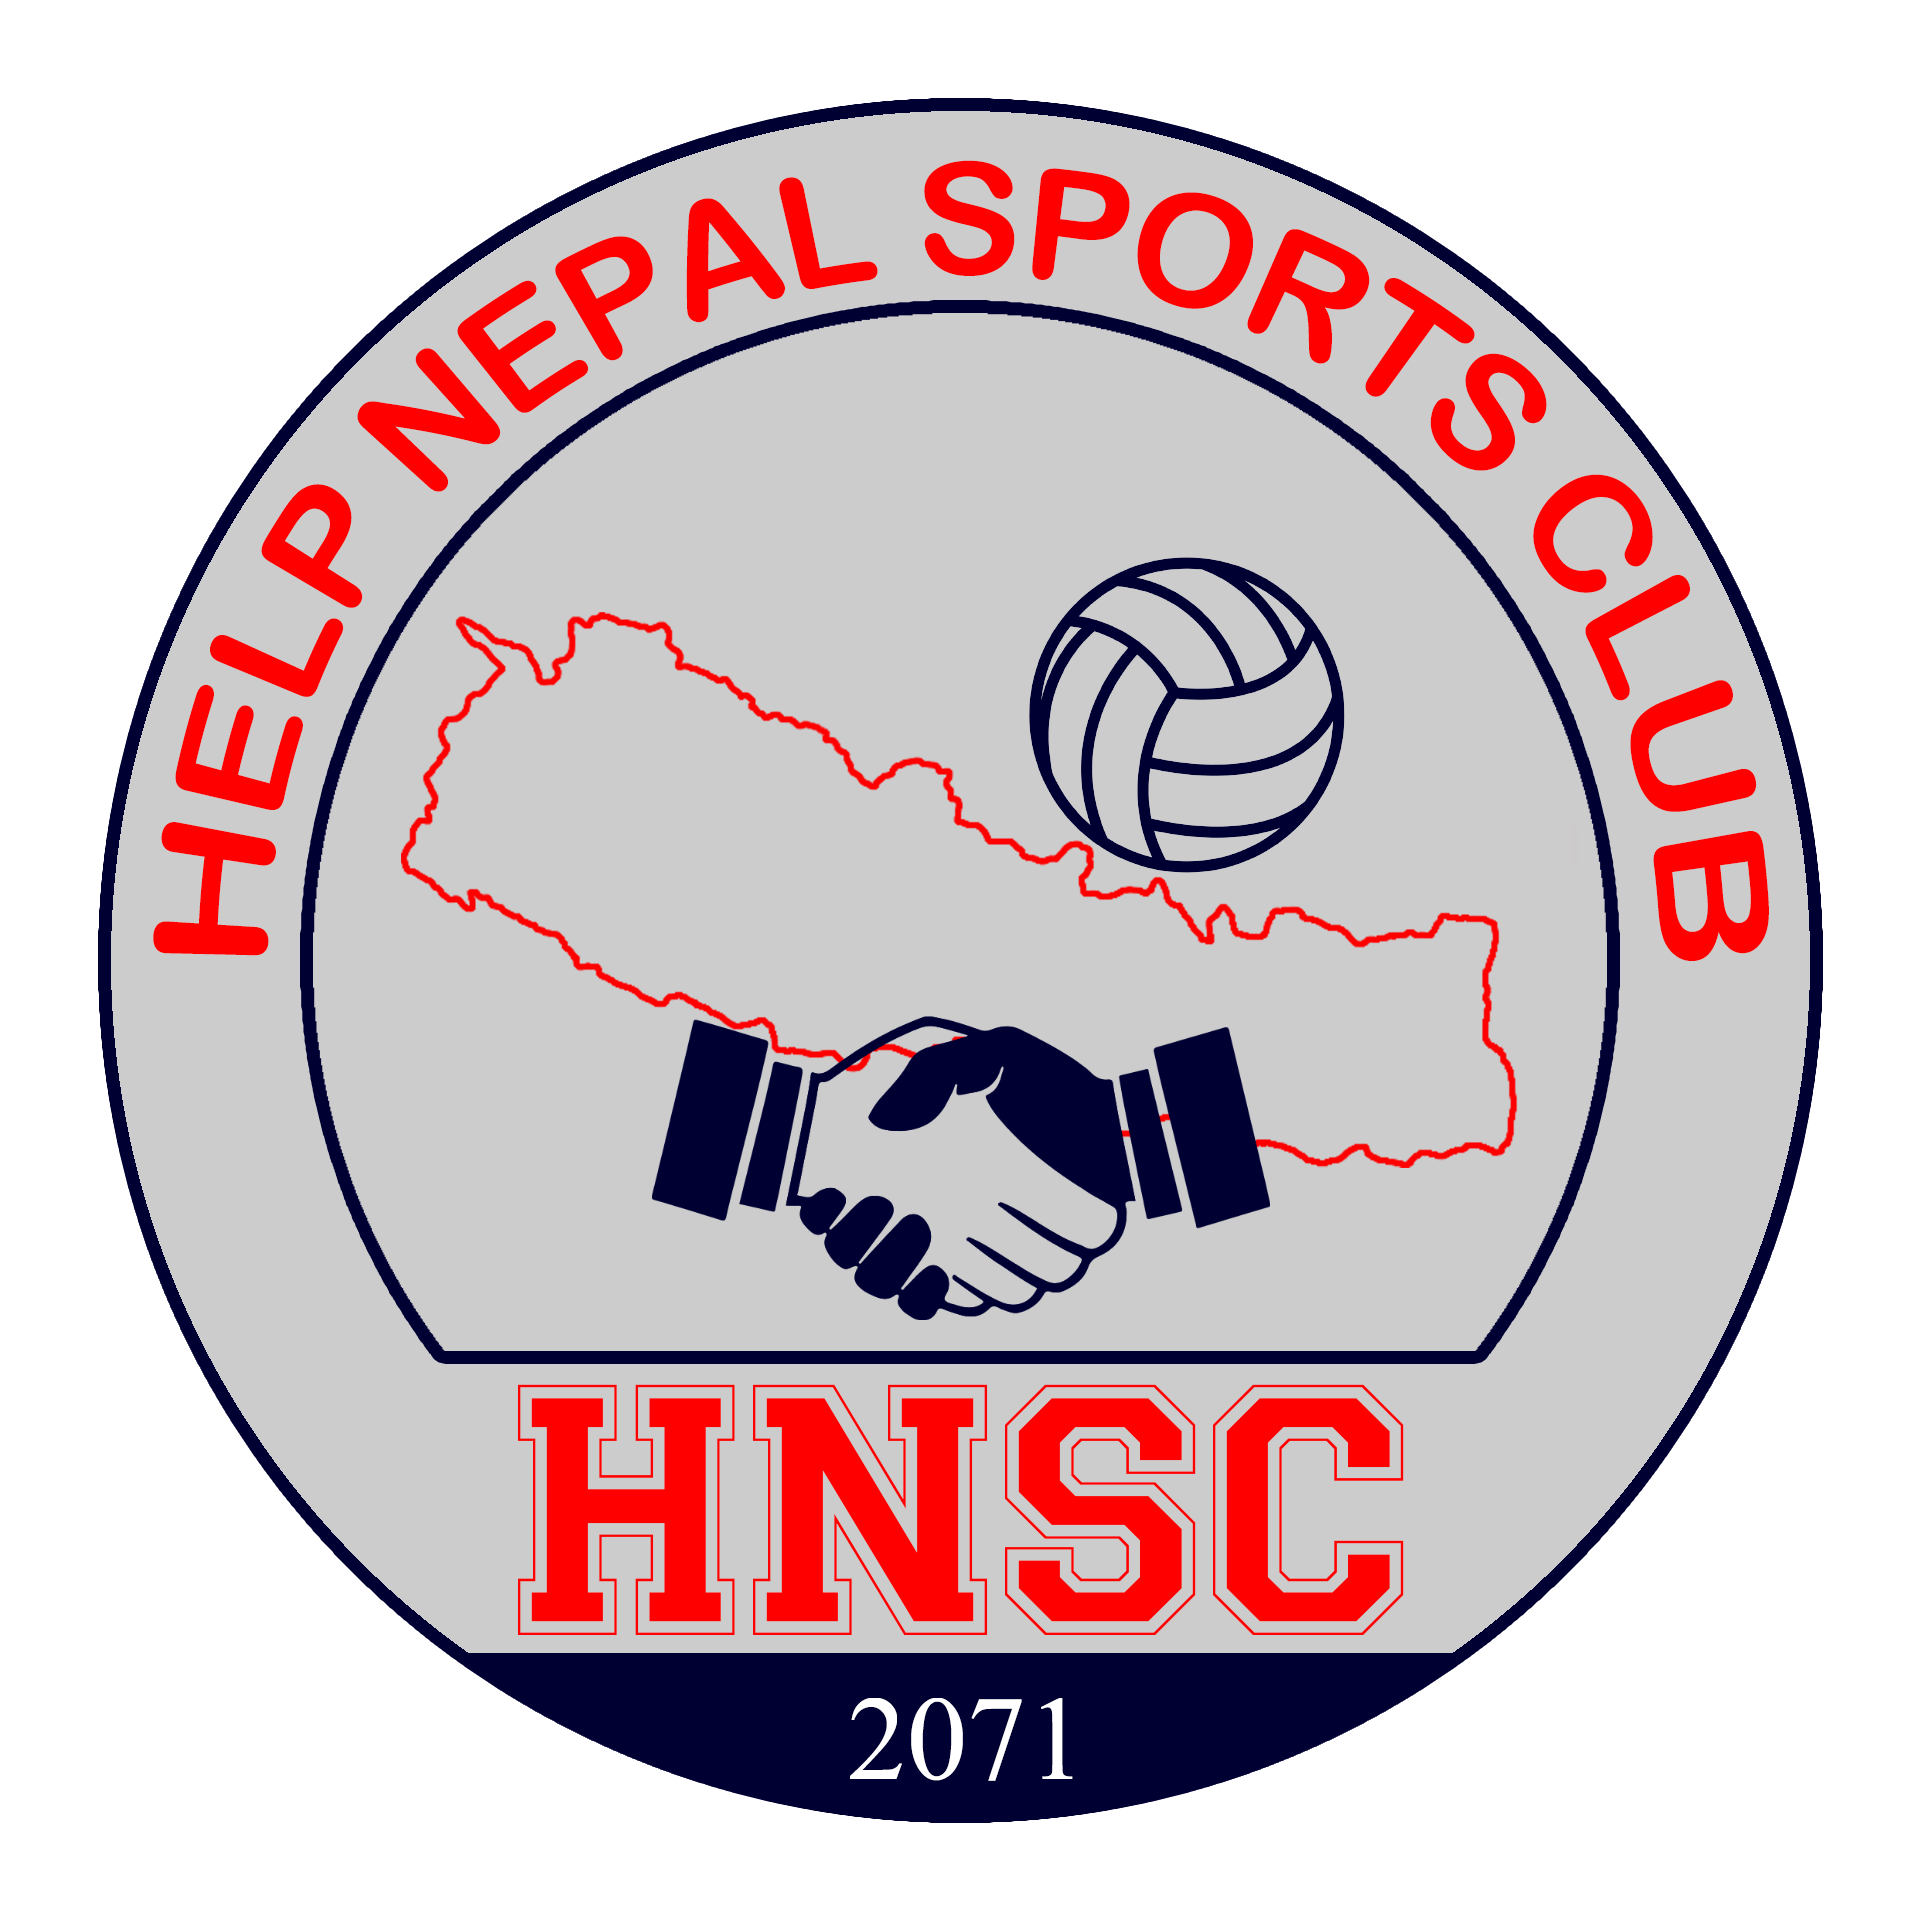 Help Nepal Sports Club